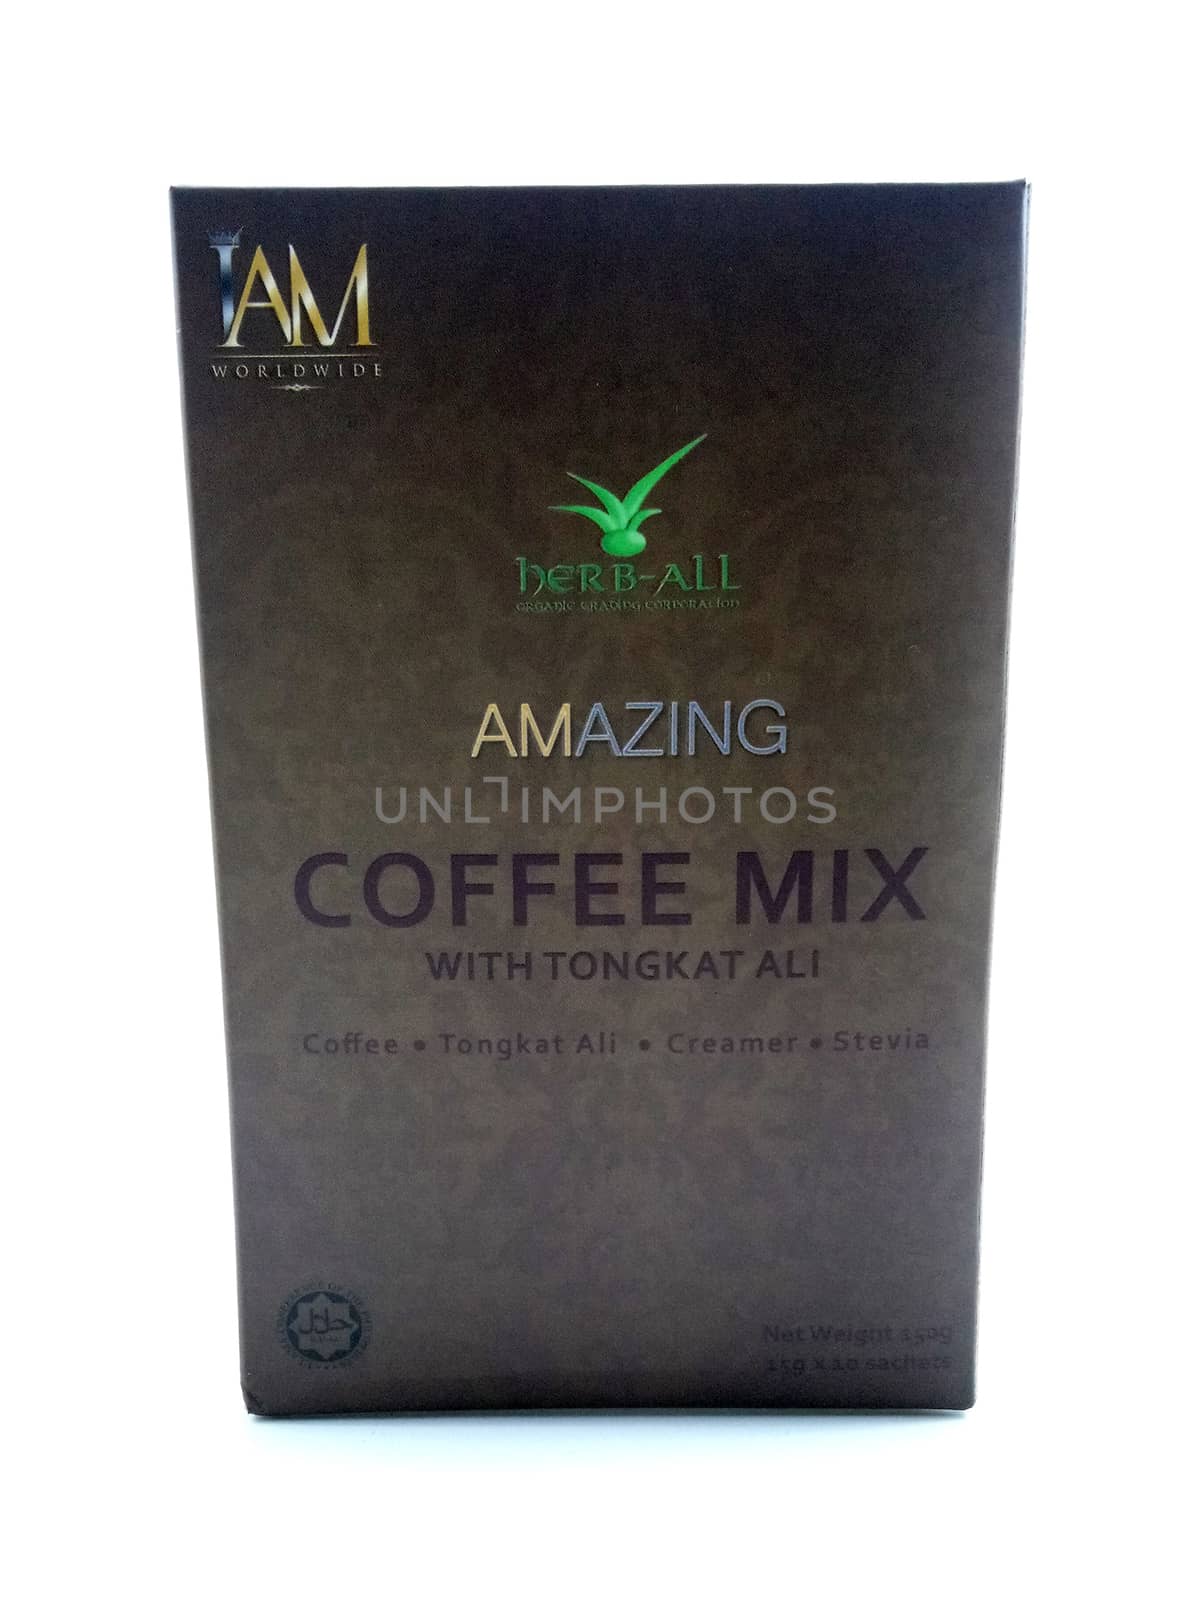 MANILA, PH - JUNE 23 - Iam amazing coffee mix with tongkat ali on June 23, 2020 in Manila, Philippines.